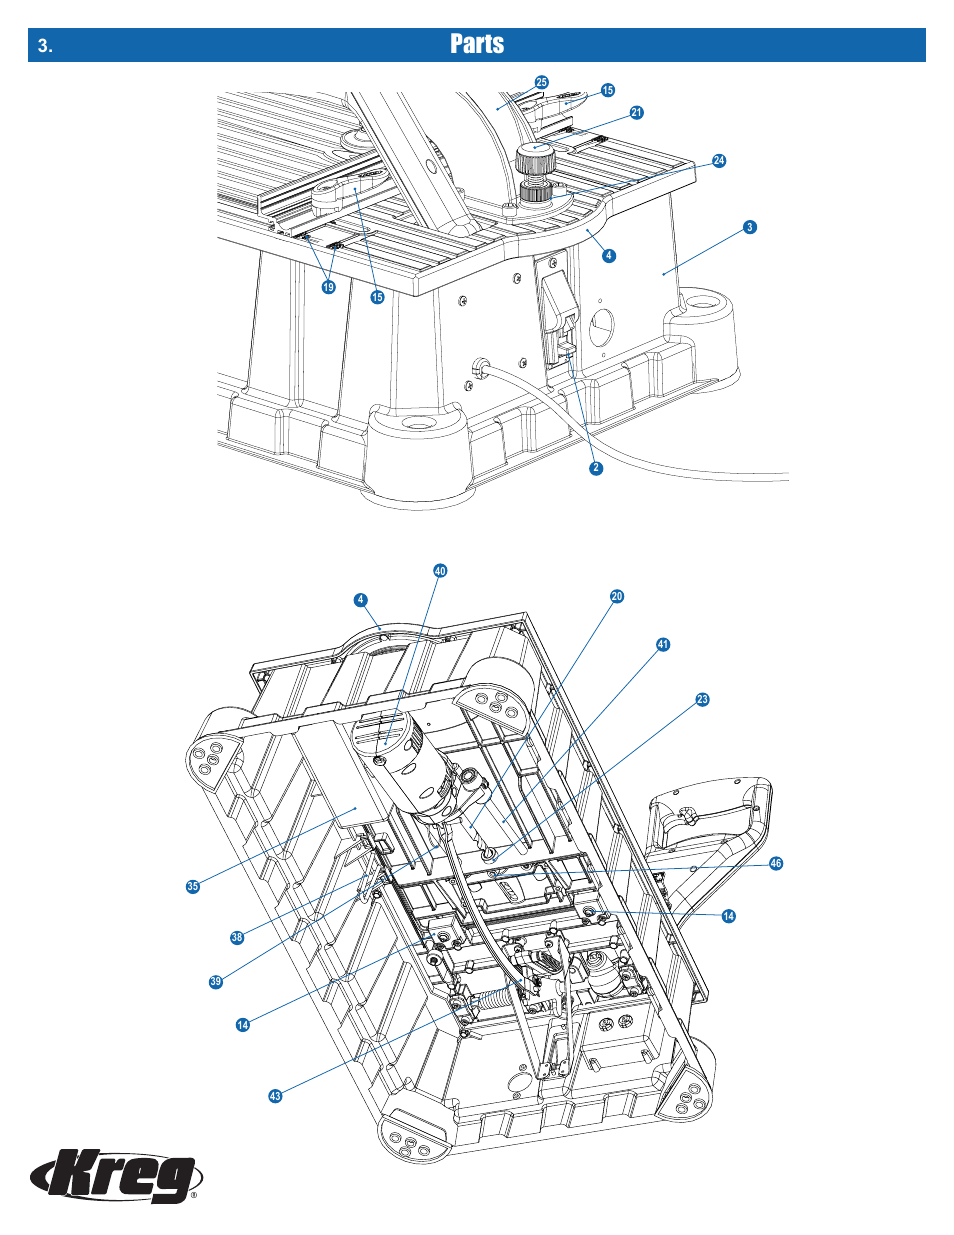 Parts | Kreg DB210 Foreman Pocket-Hole Machine User Manual | Page 6 / 44